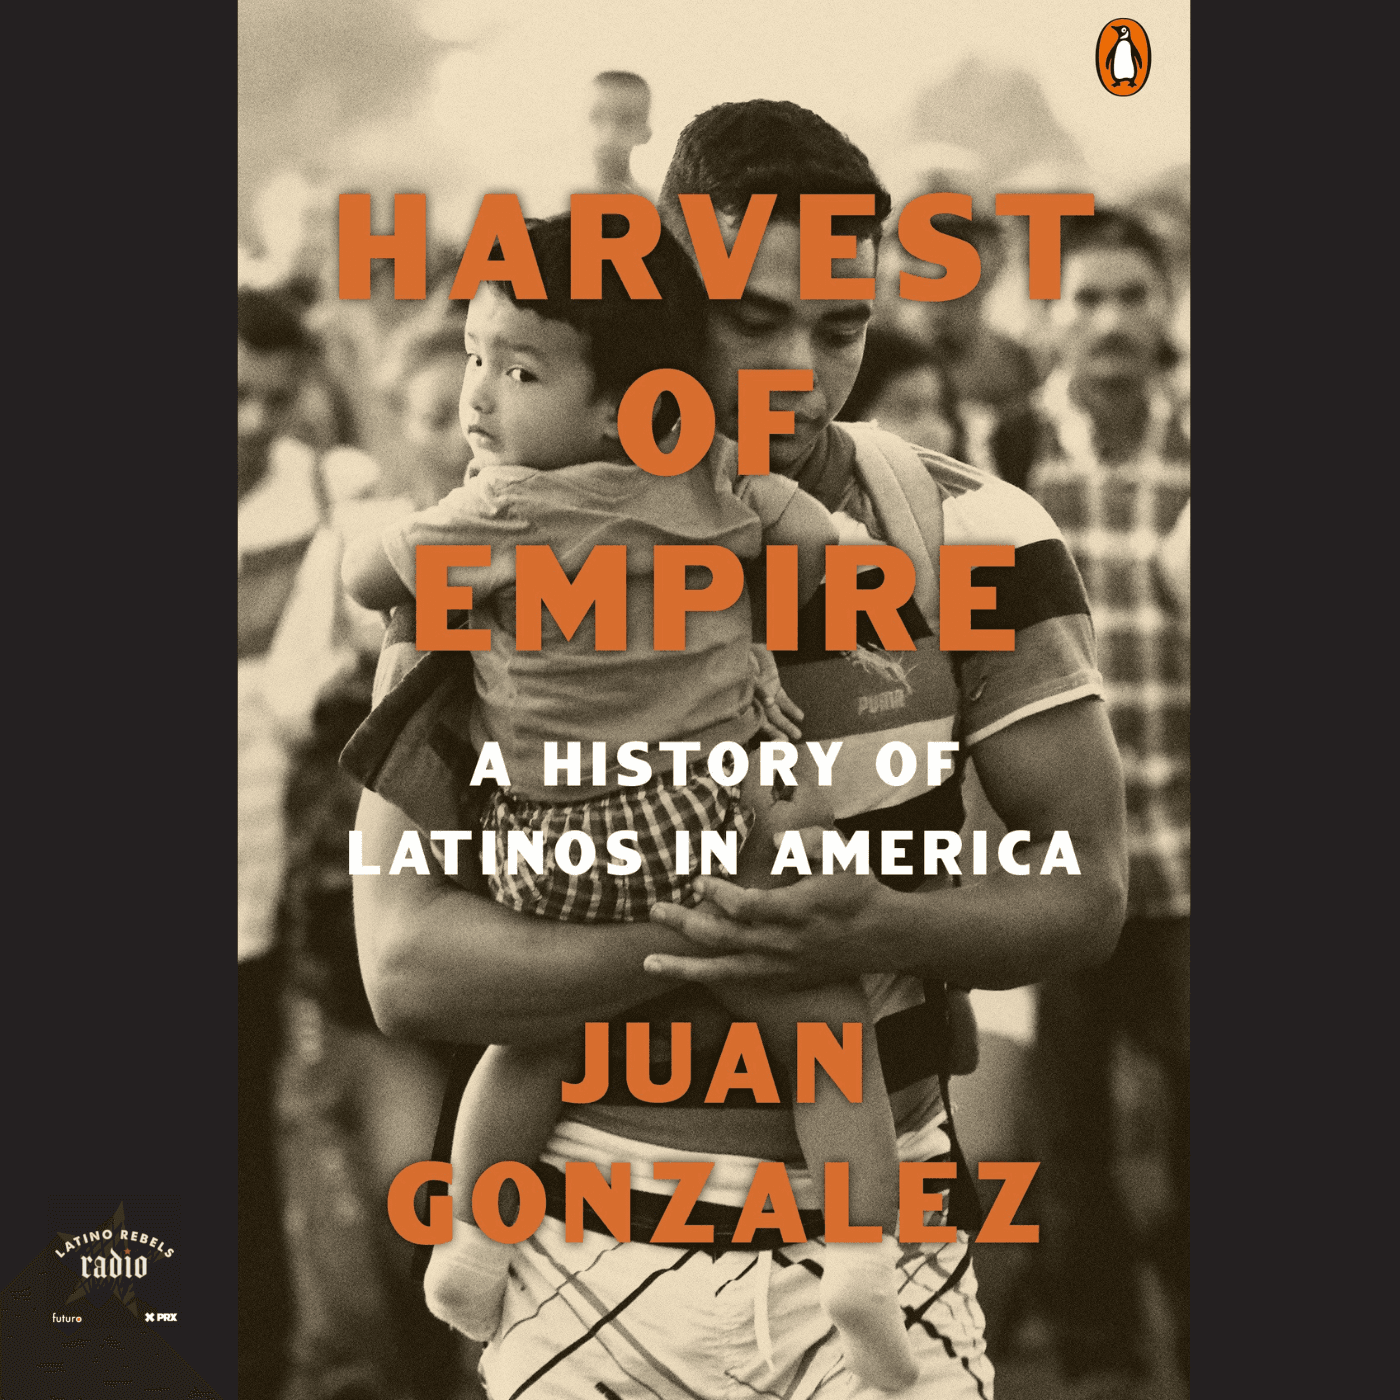 Thumbnail for "Juan González's Harvest of Empire".